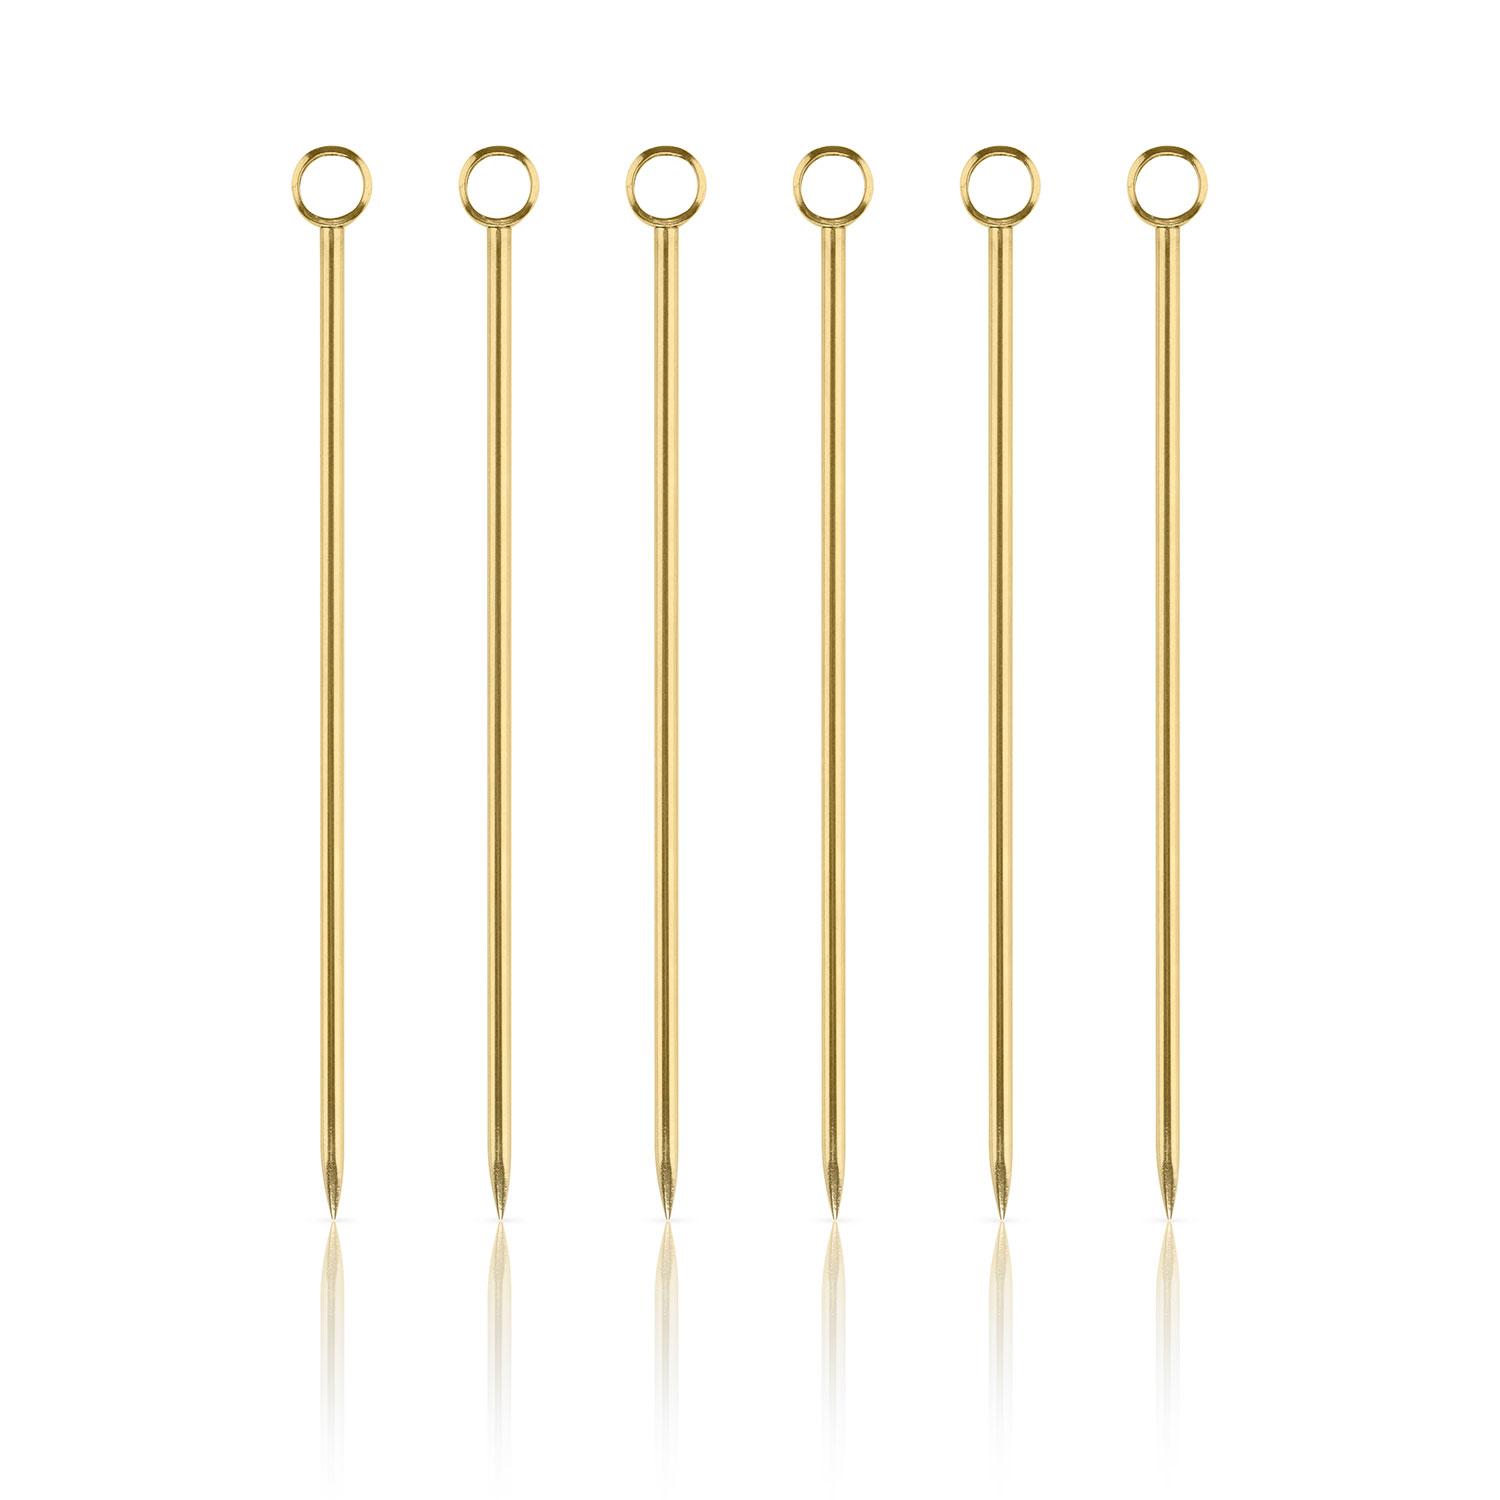 UBERSTAR Cocktail Sticks Set - Stainless Steel - Gold